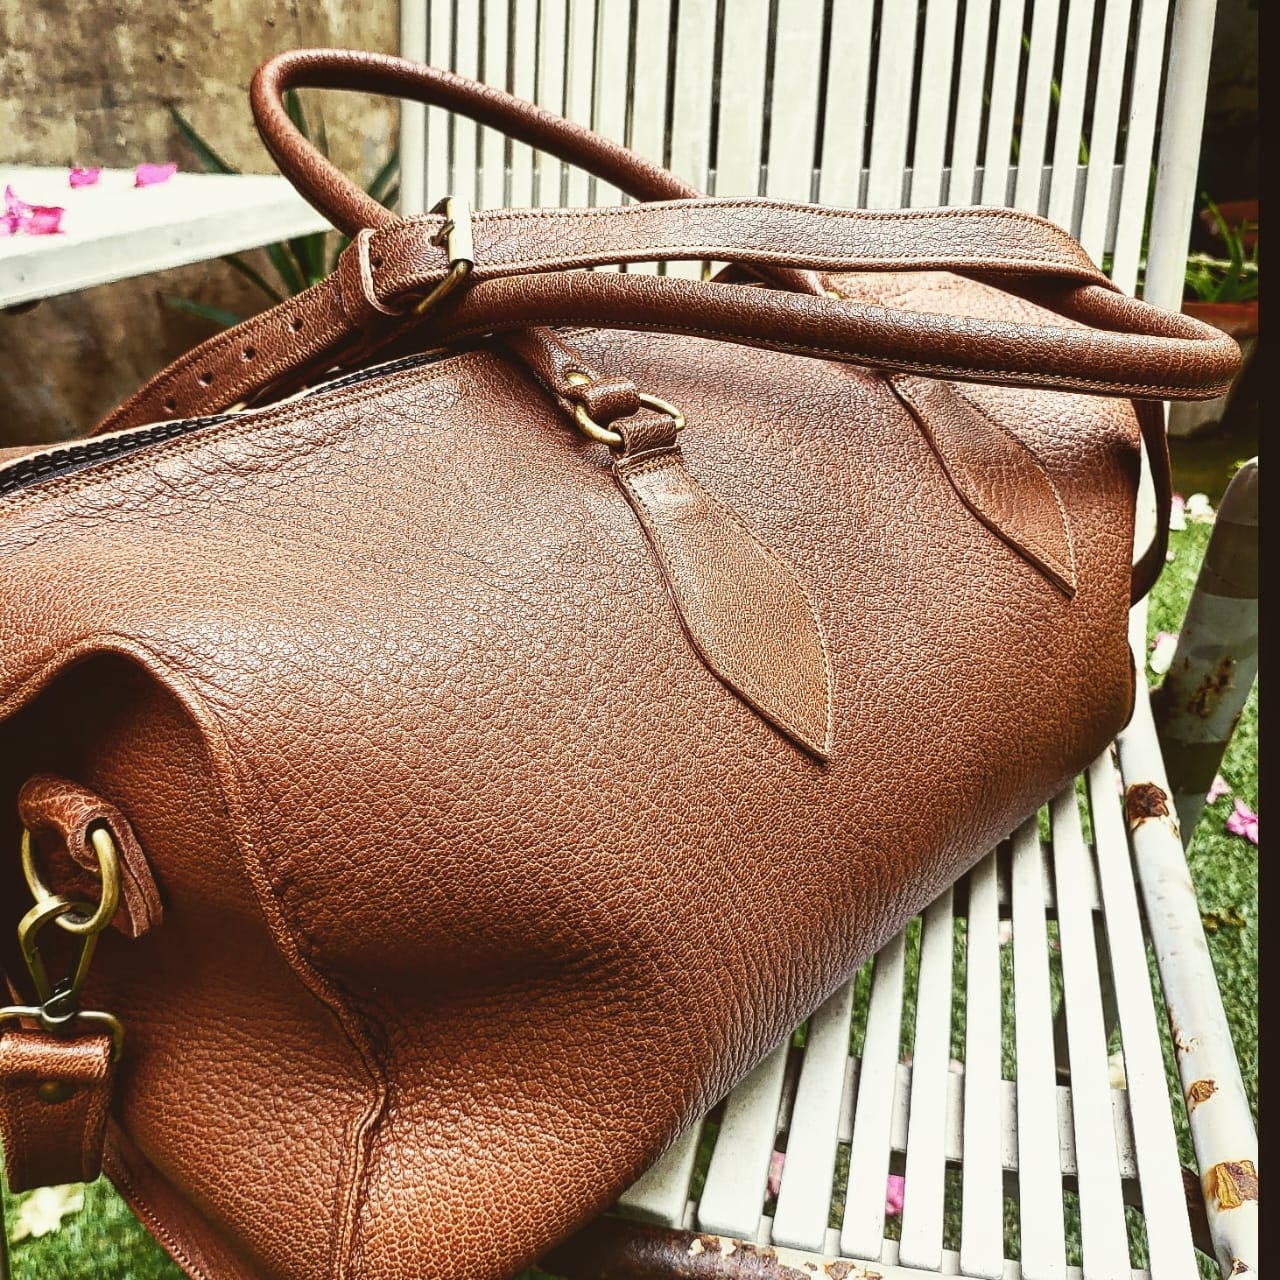 Round Brown Handmade Carry-on Luggage Bag